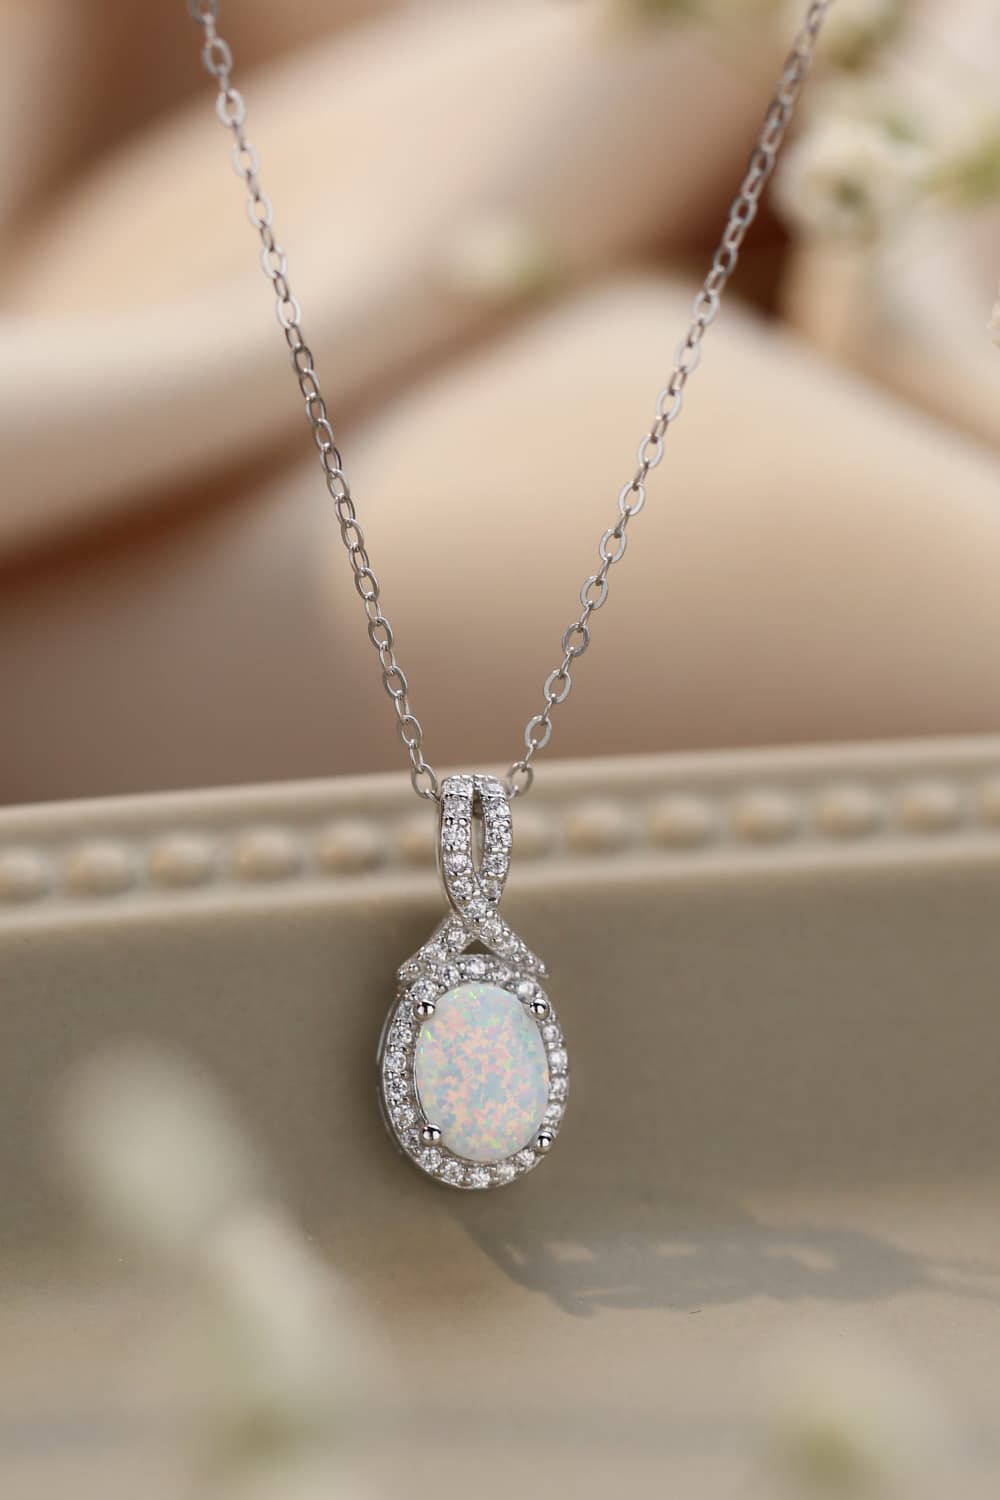 Feeling My Best - Captivating Opal Pendant Necklace - Awaken Your True Romance - Guy Christopher